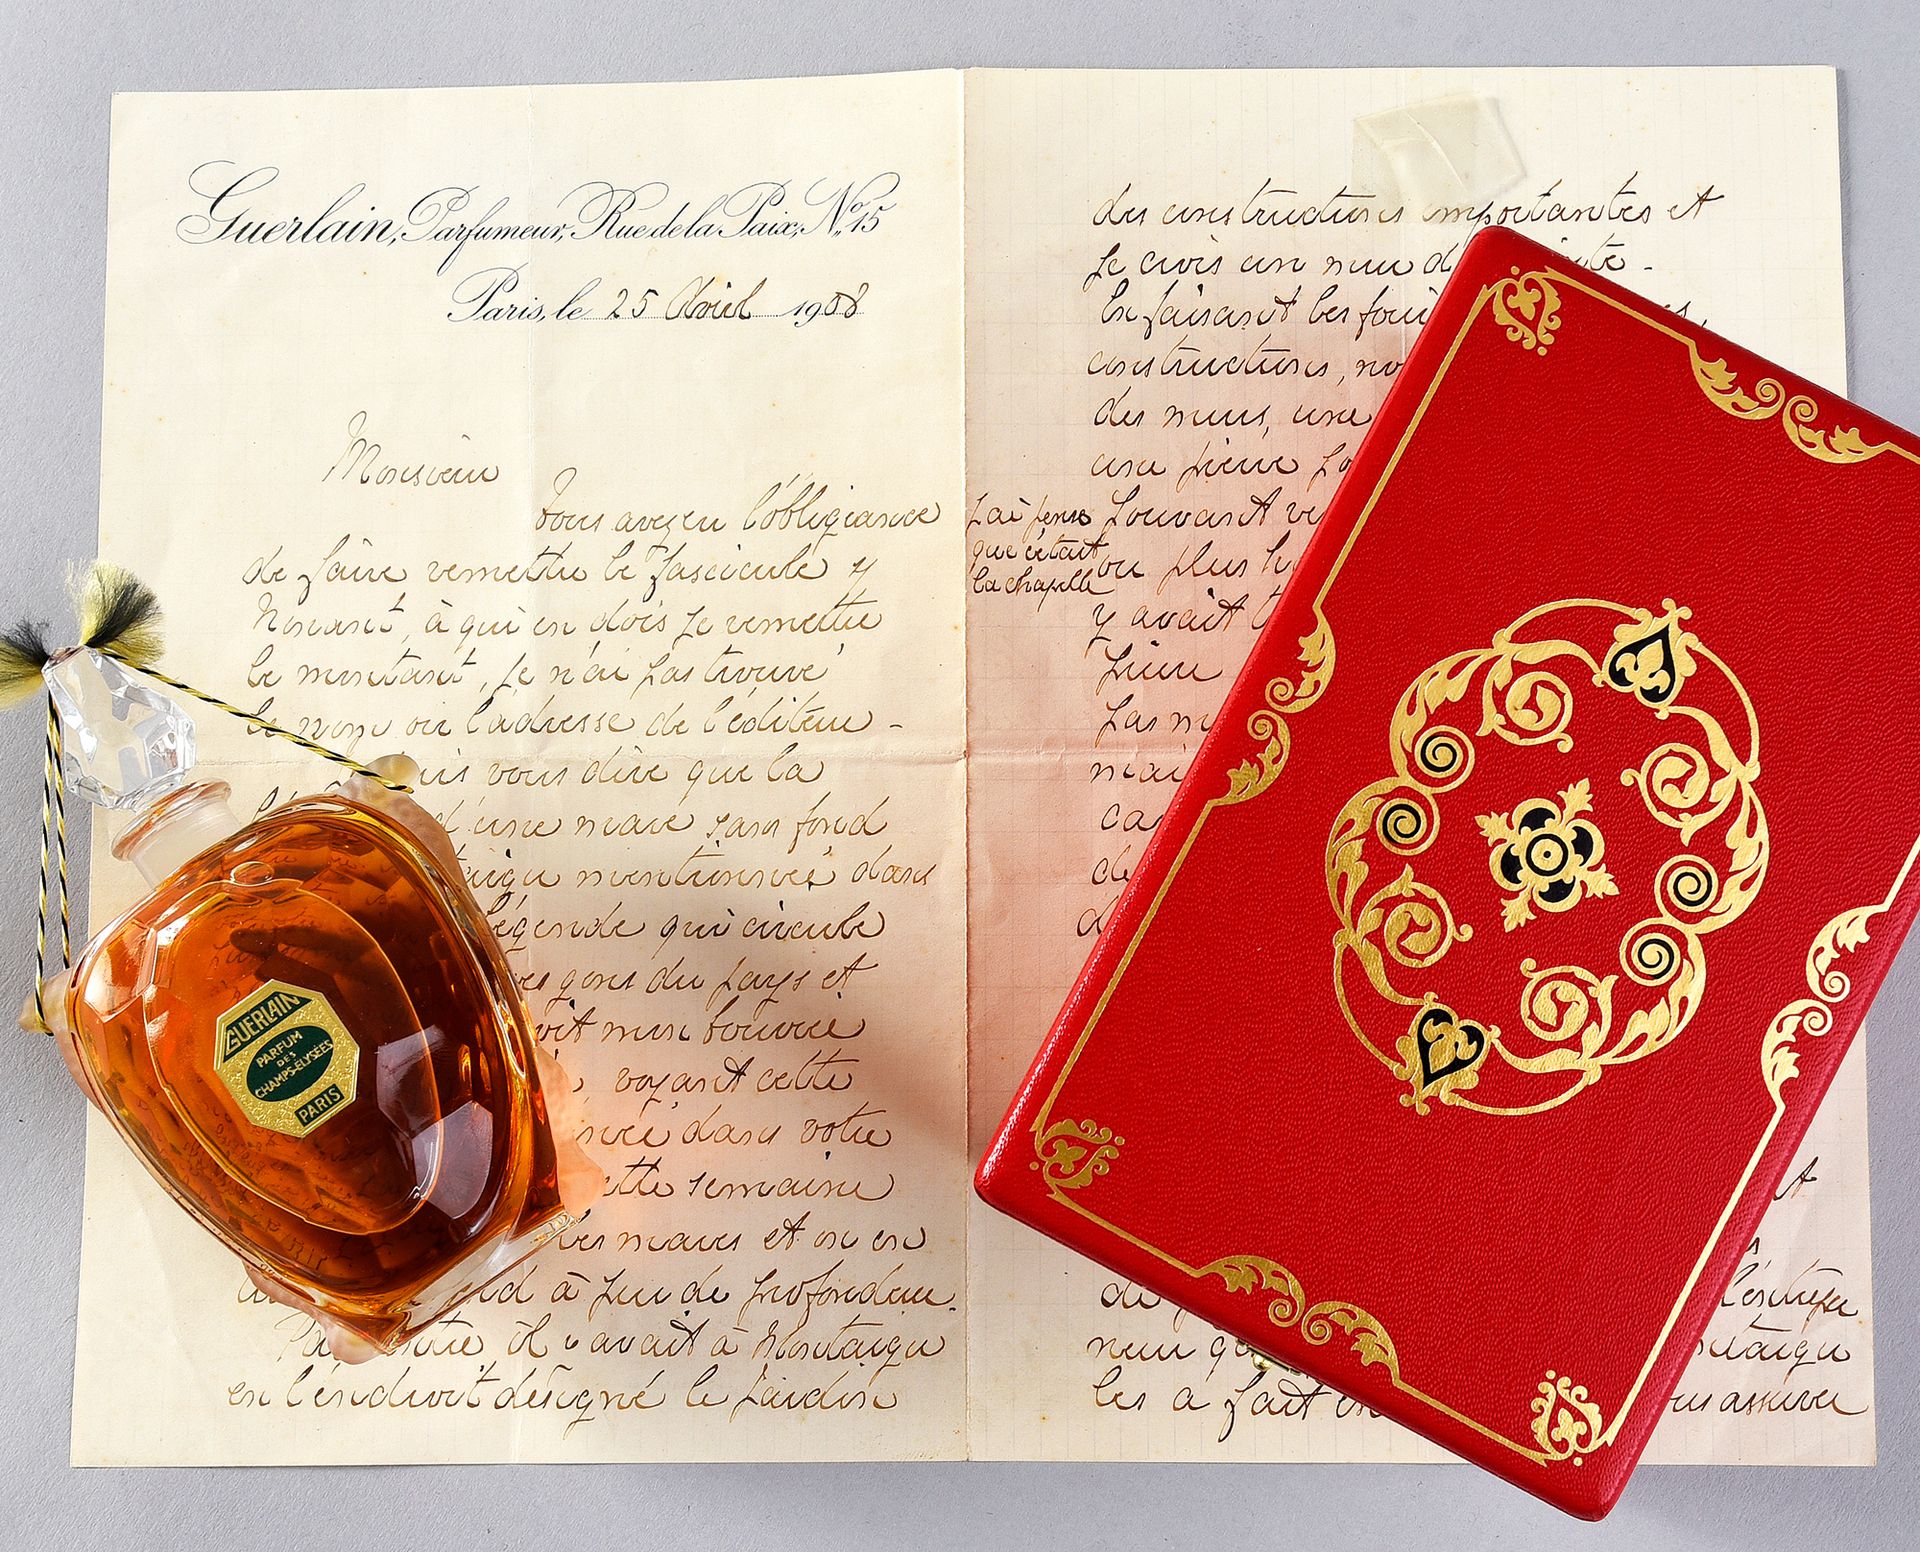 Guerlain - 25 Avril 1908 - Handwritten letter from Gabriel Guerlain relating the&hellip;